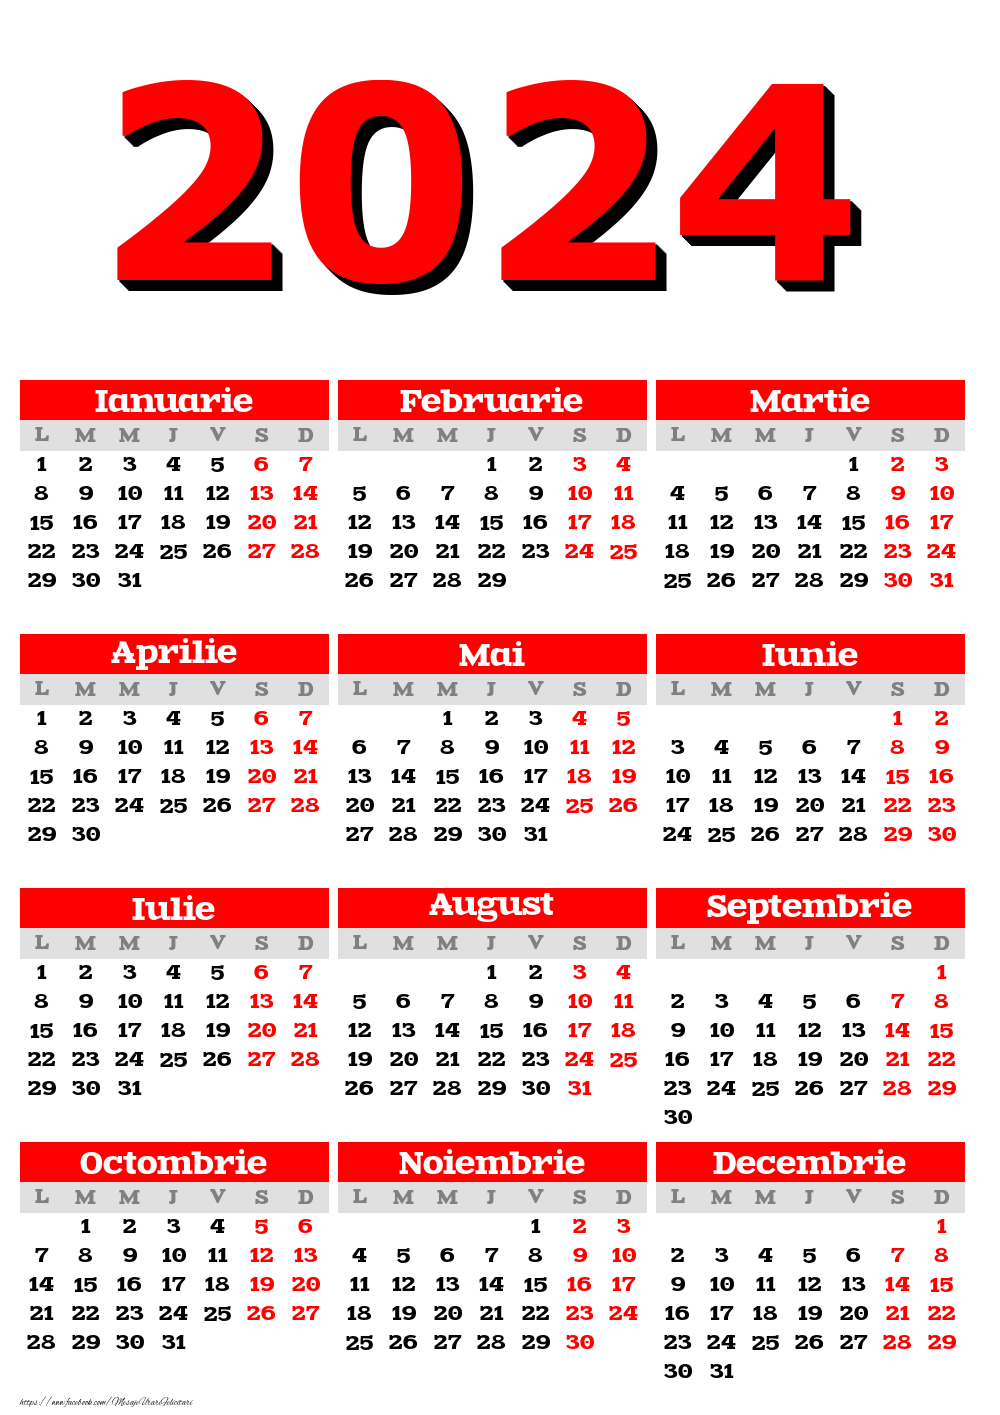 Imagini cu calendare - Calendar 2024 - Clasic Rosu - Model 00114 - mesajeurarifelicitari.com